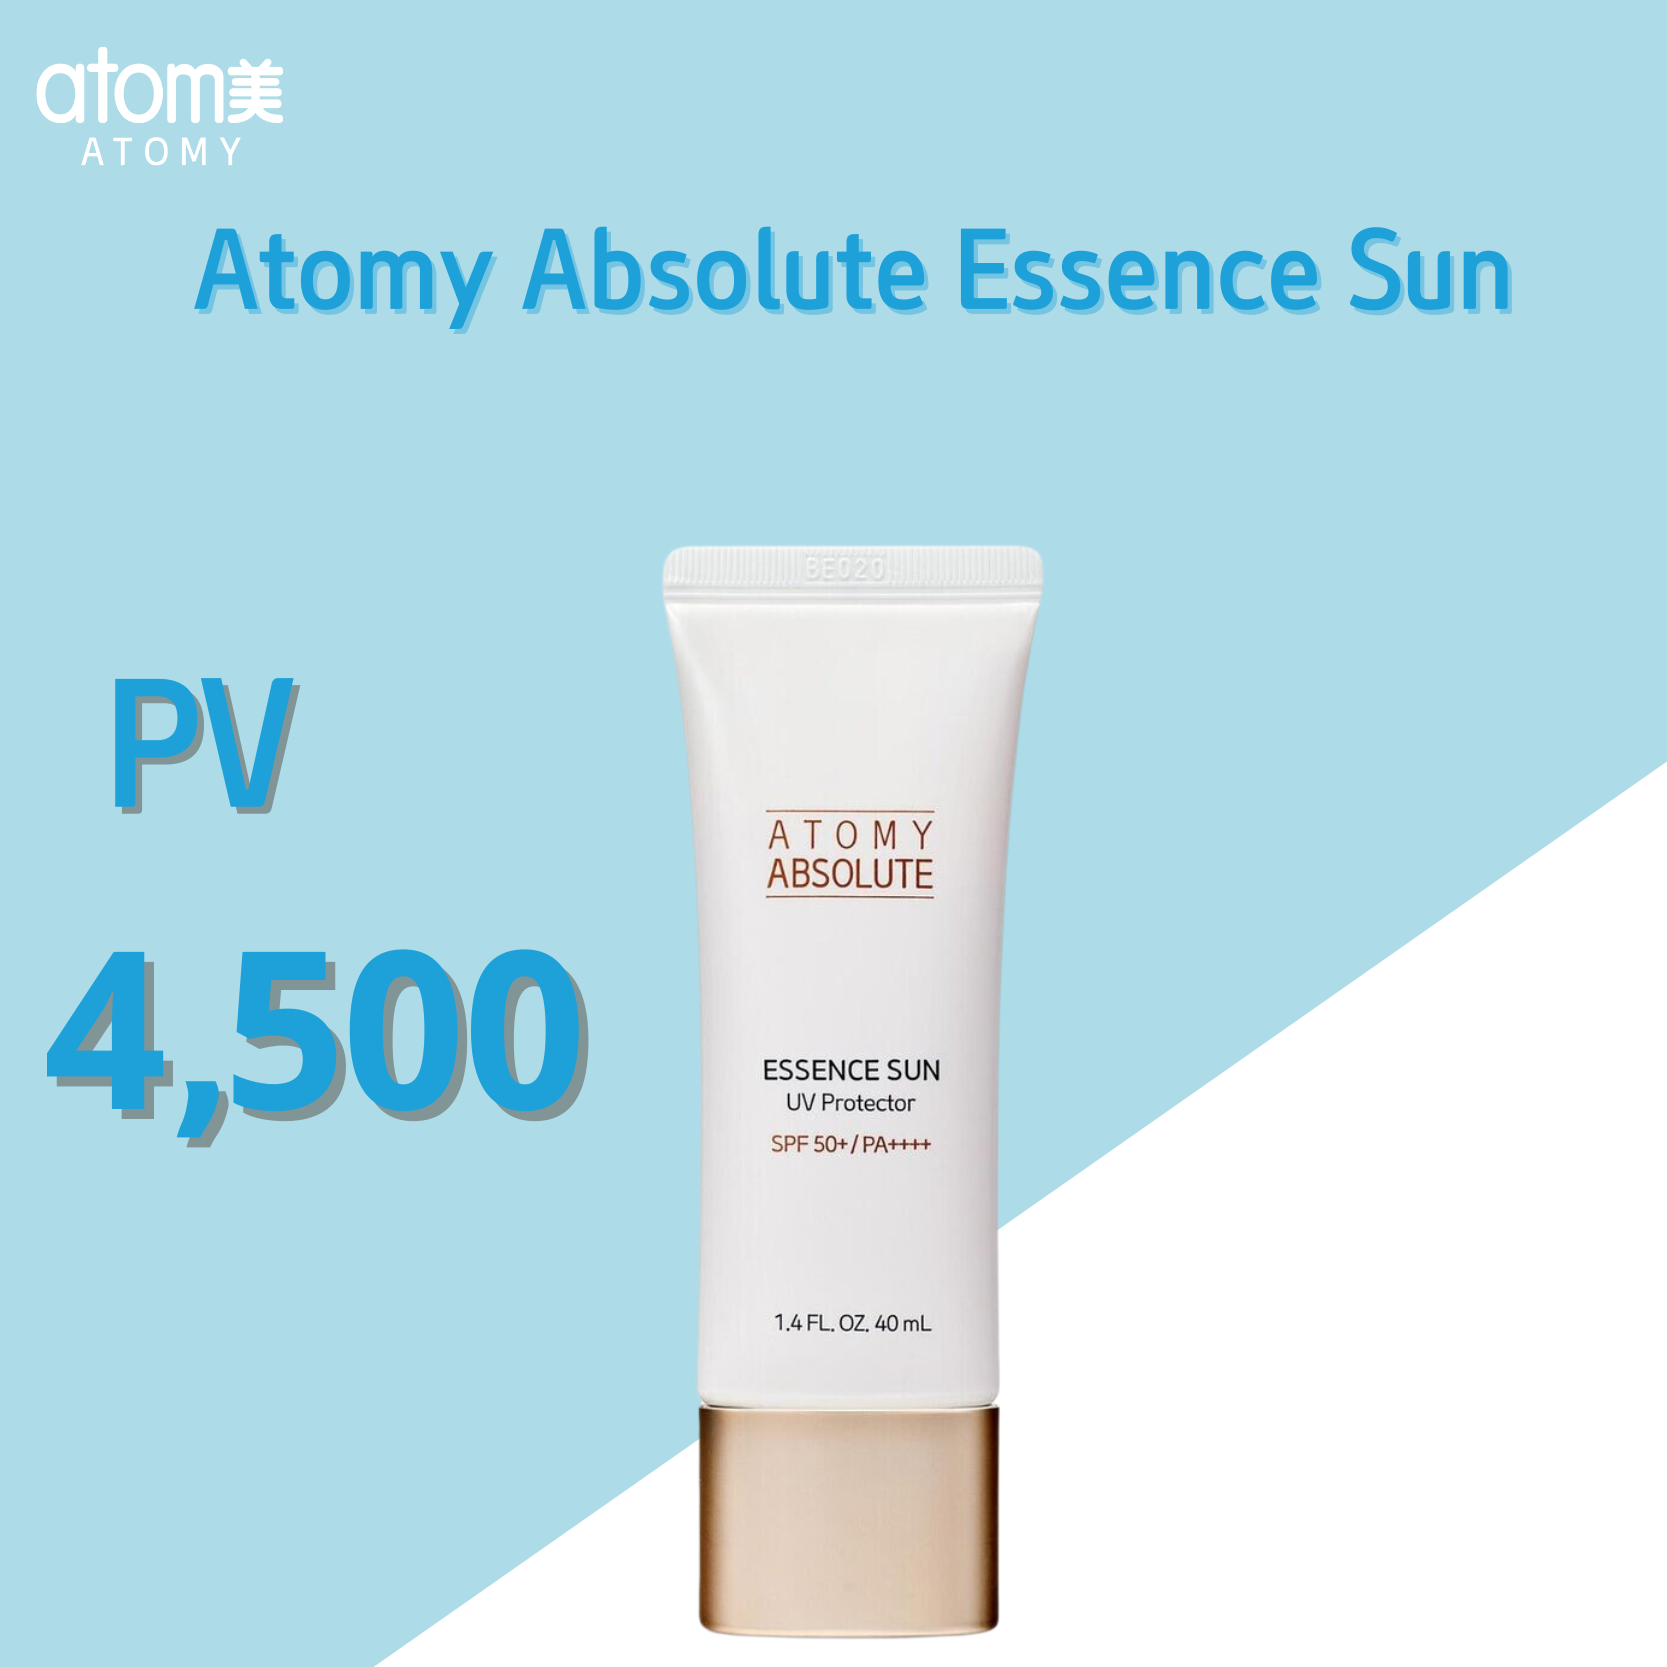 Atomy Absolute Essence Sun